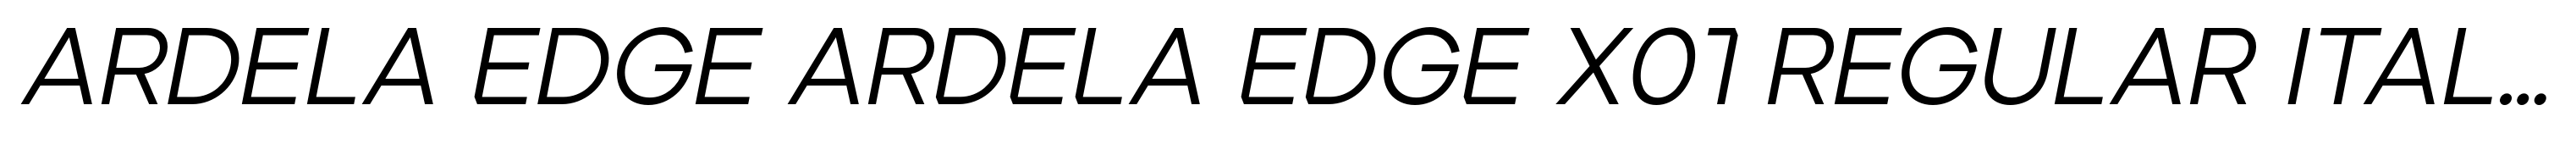 Ardela Edge ARDELA EDGE X01 Regular Italic